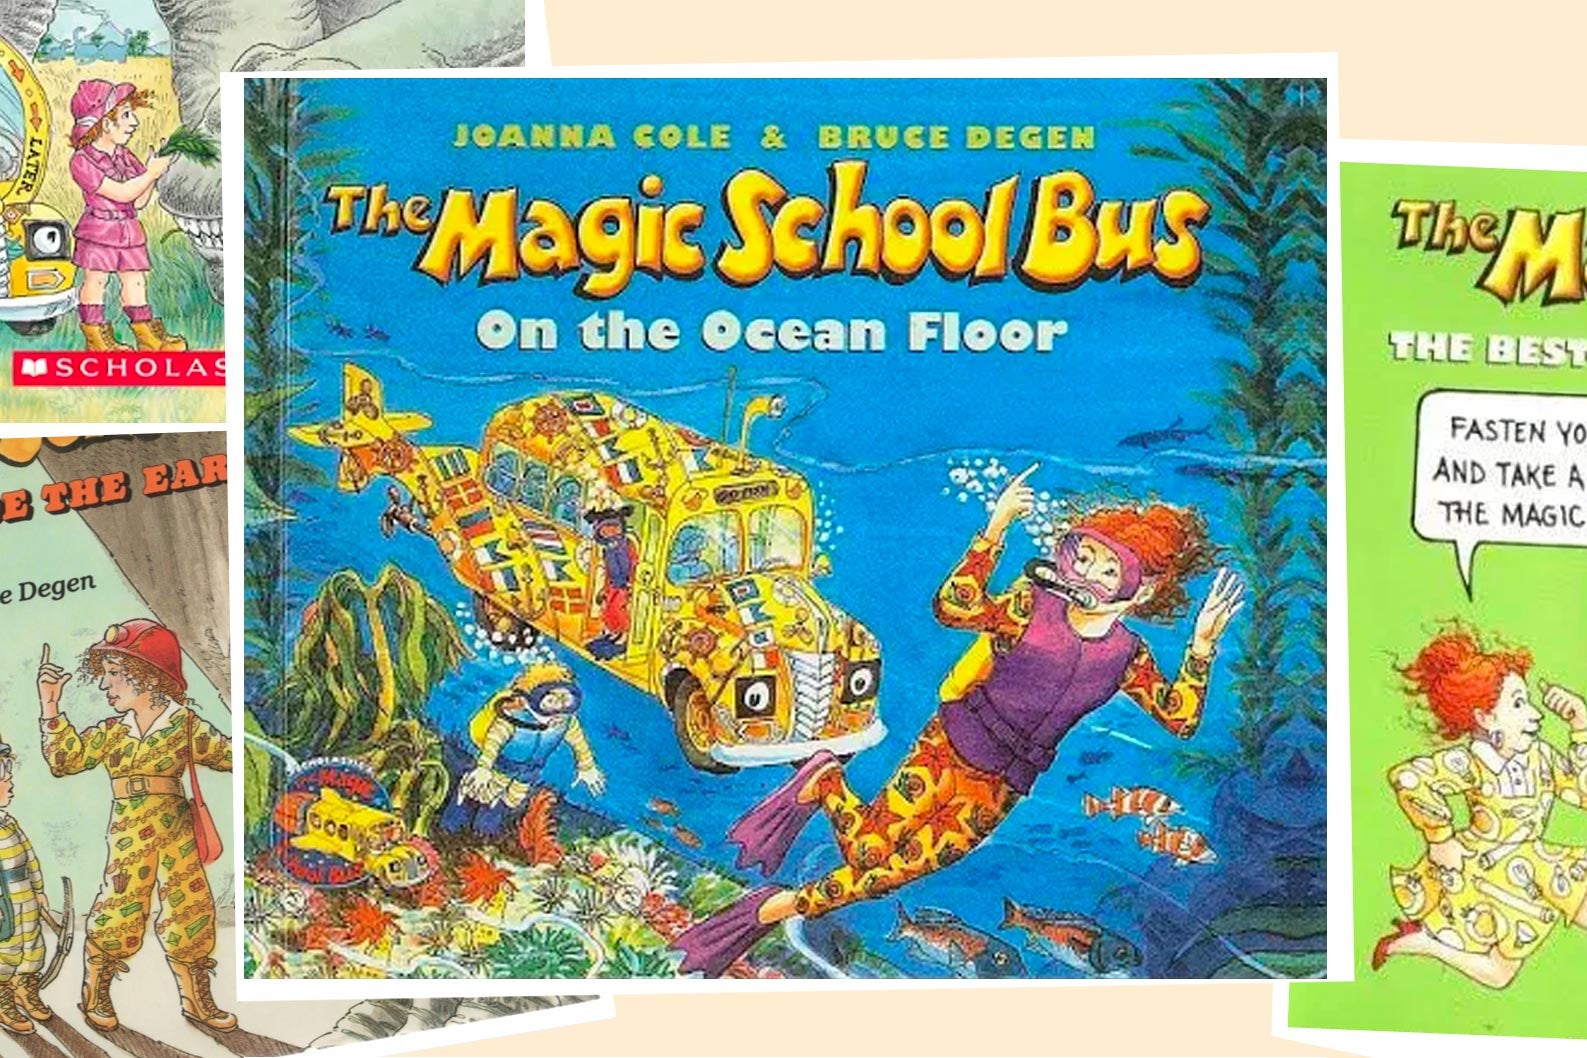 The Magic School Bus made the world safe for weird teachers.